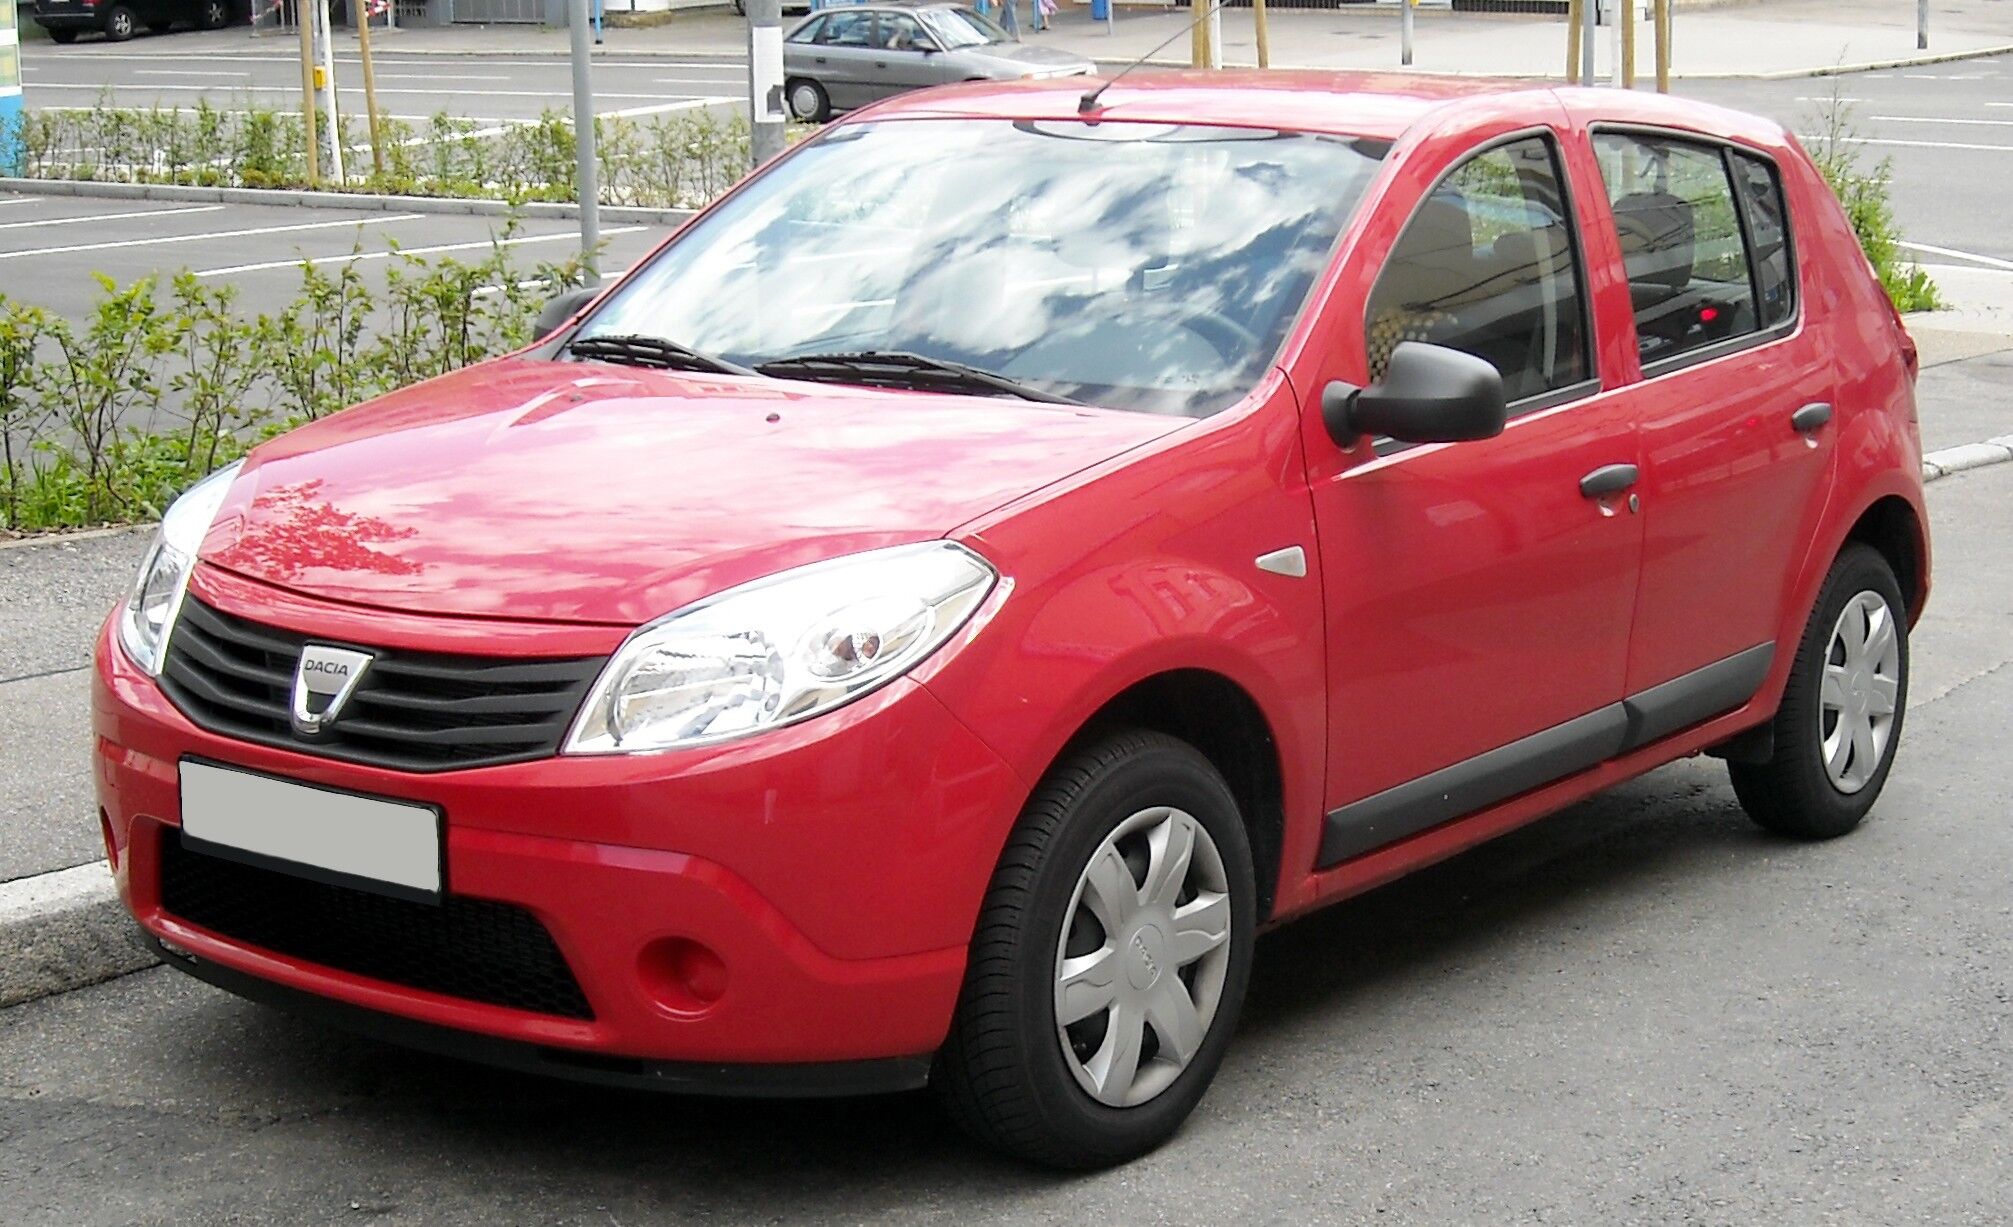 Dacia Sandero, Top Gear Wiki